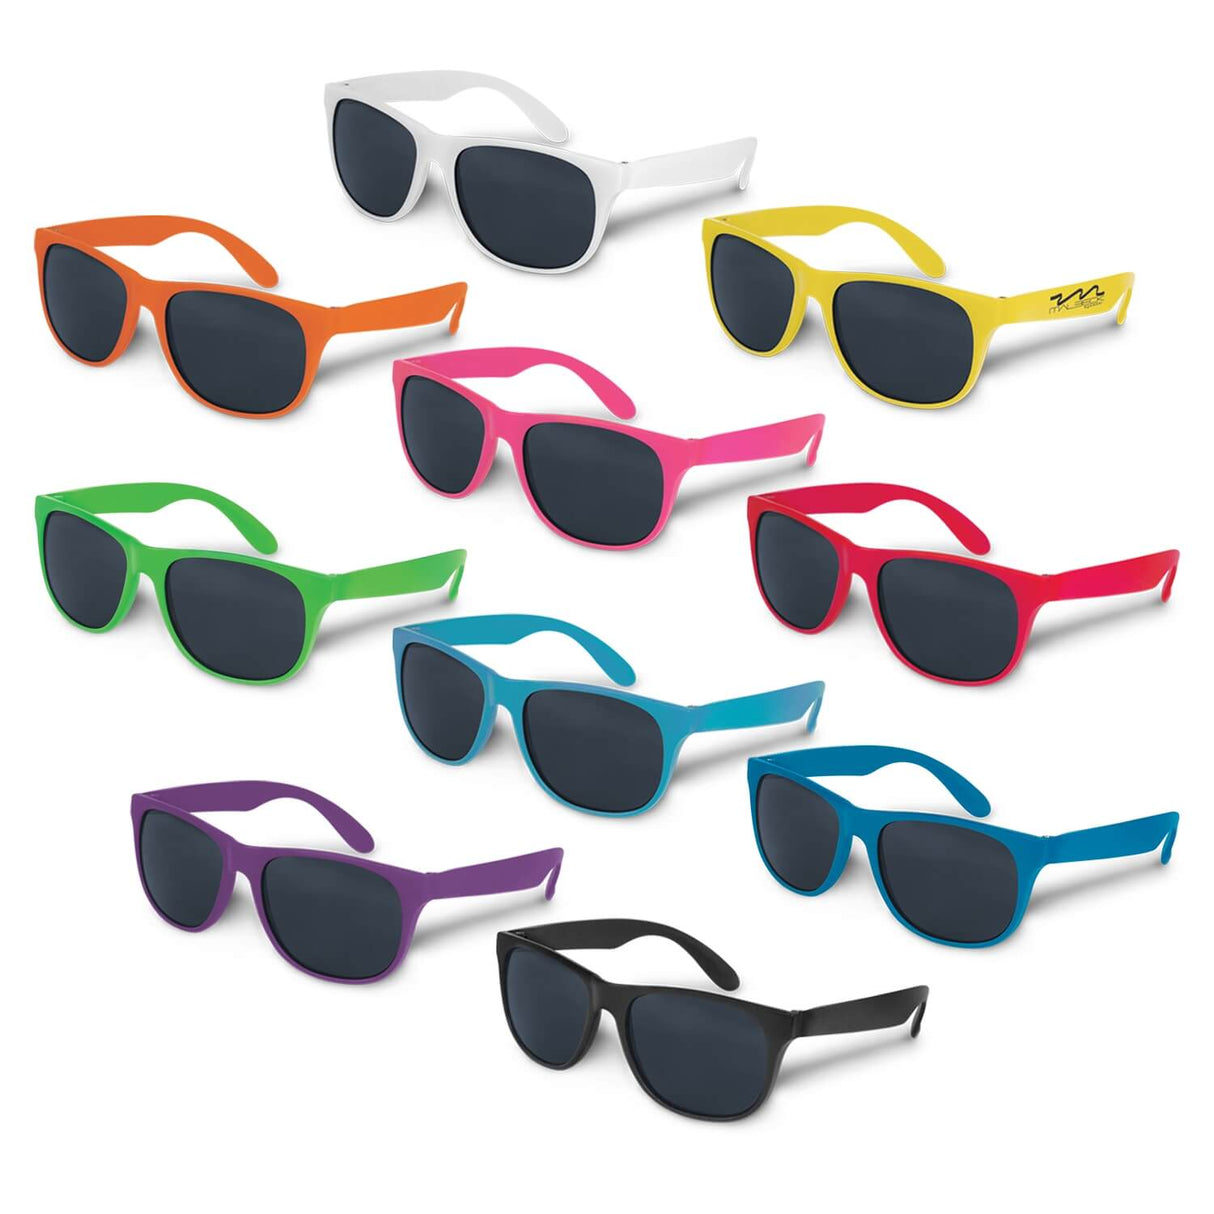 Malibu Basic Sunglasses - Printed